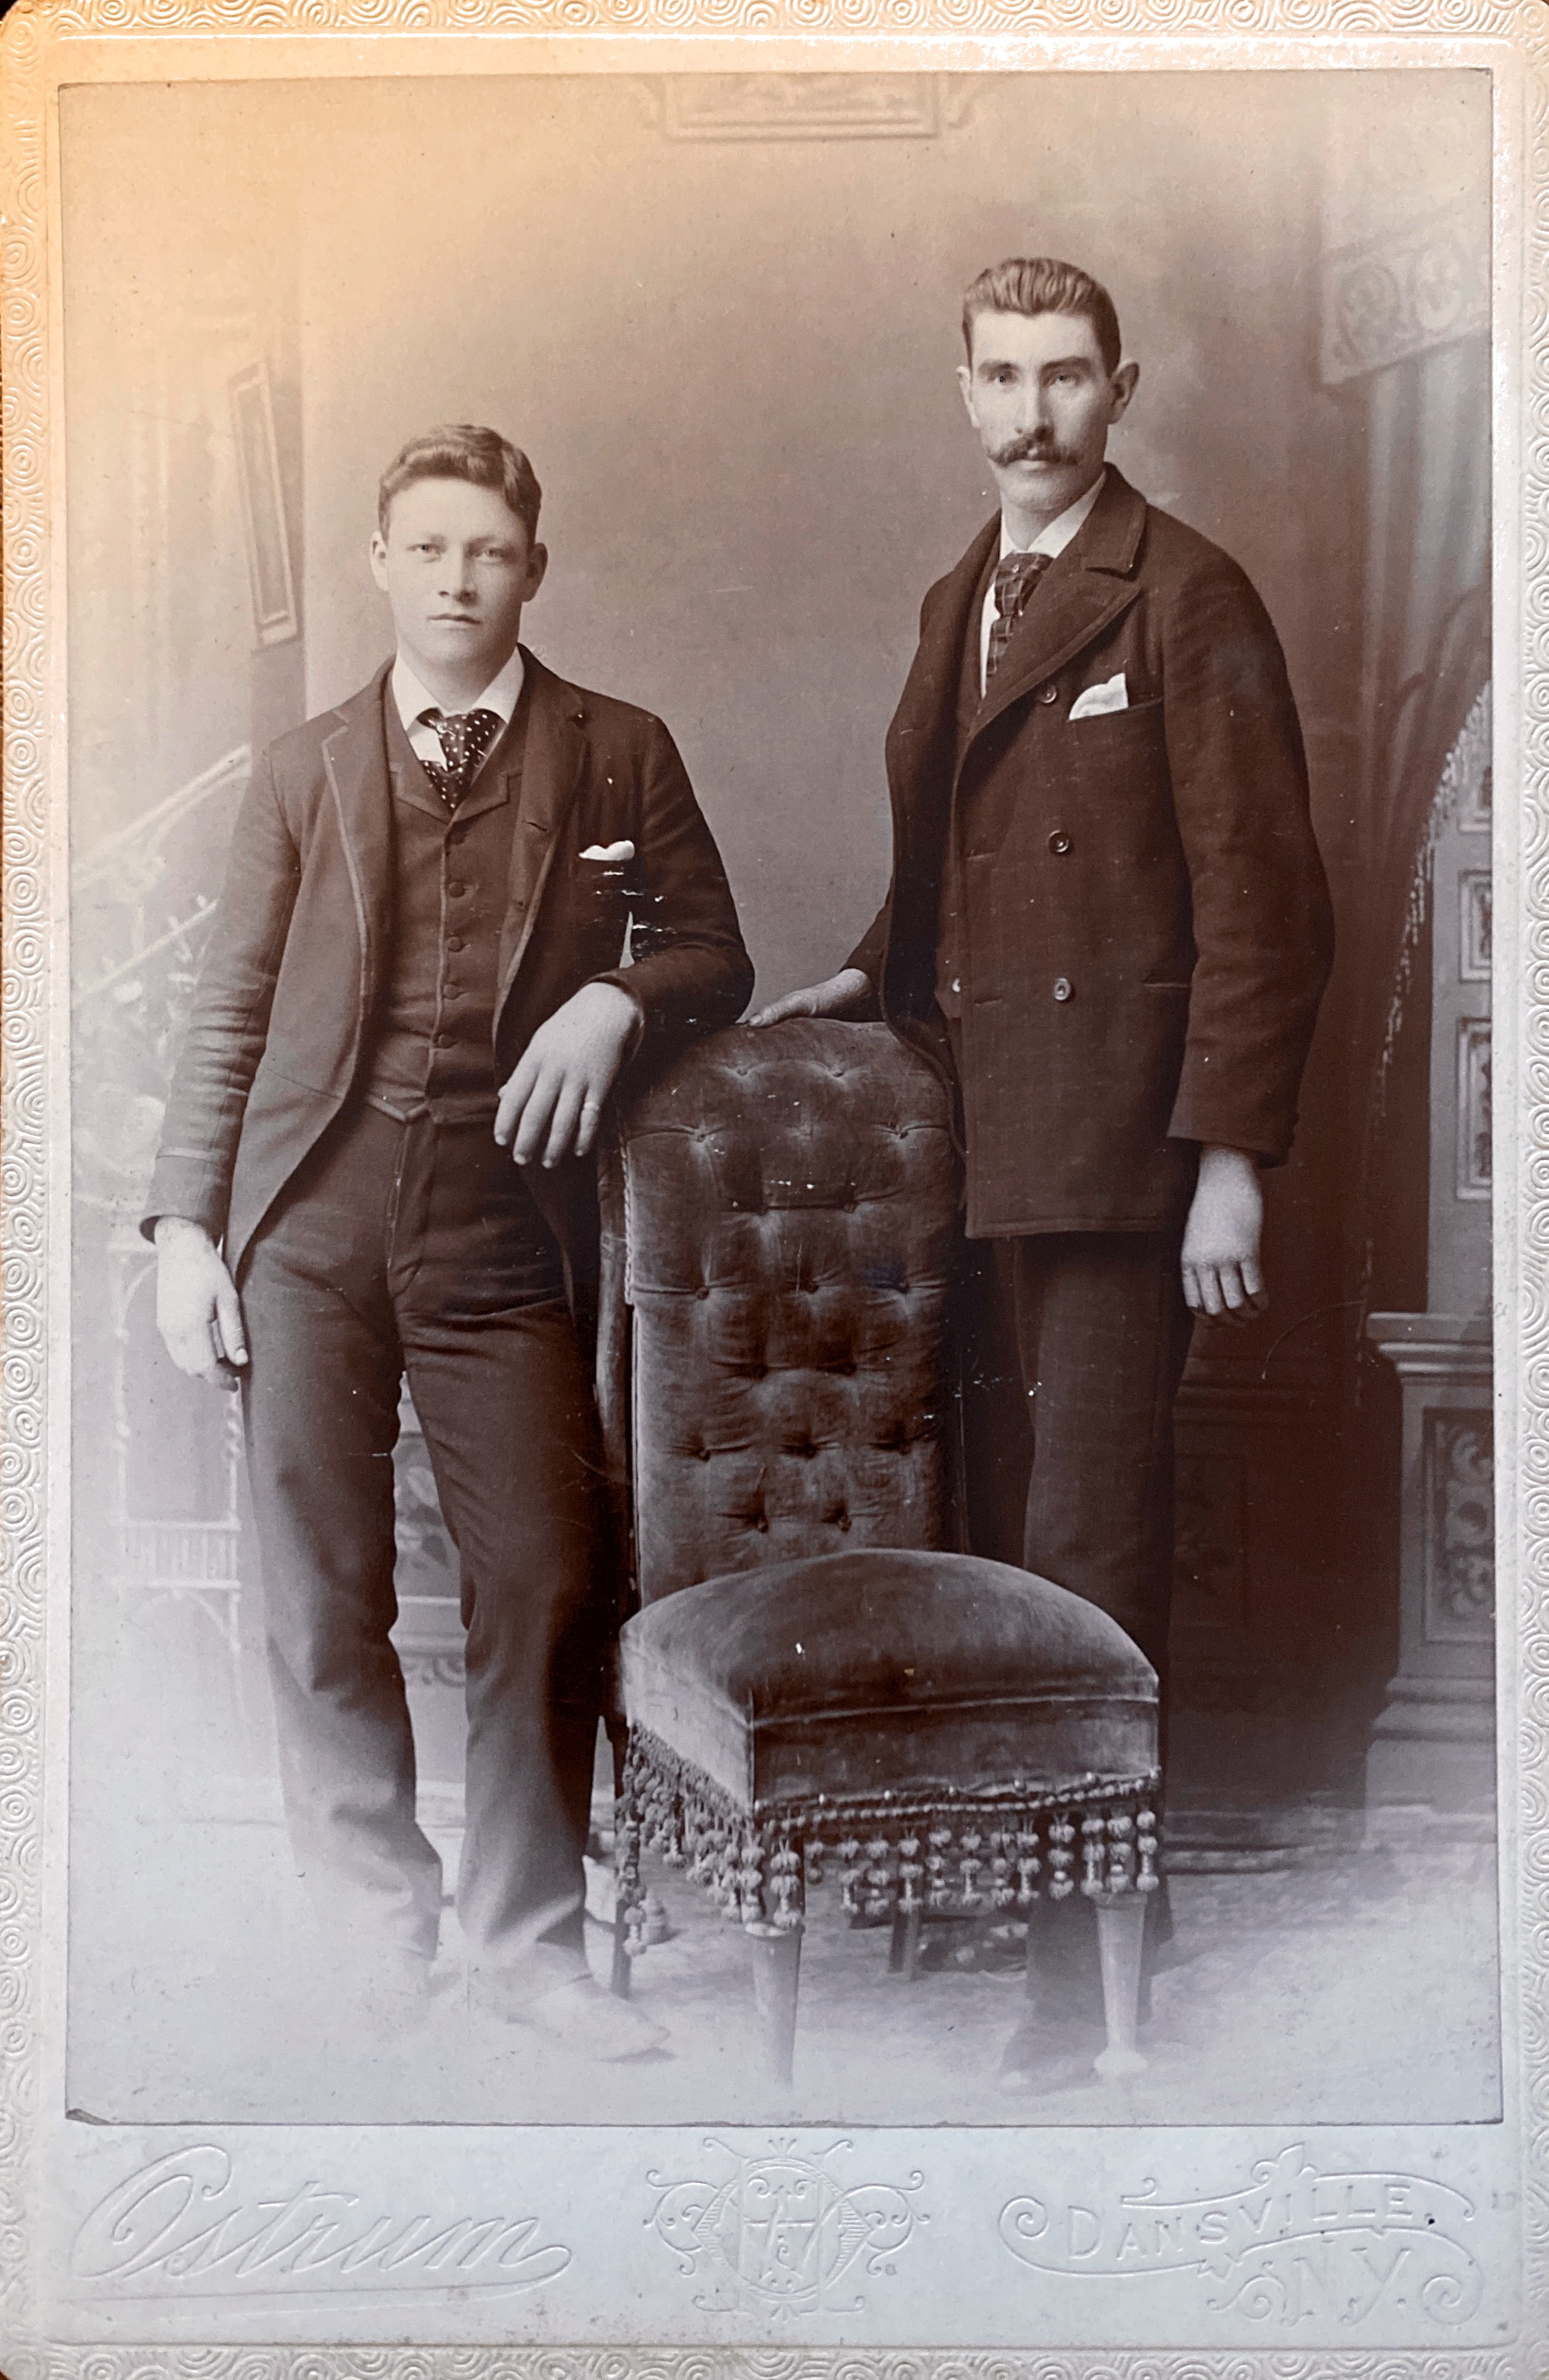 Possible Merritt B and Frank around 1890